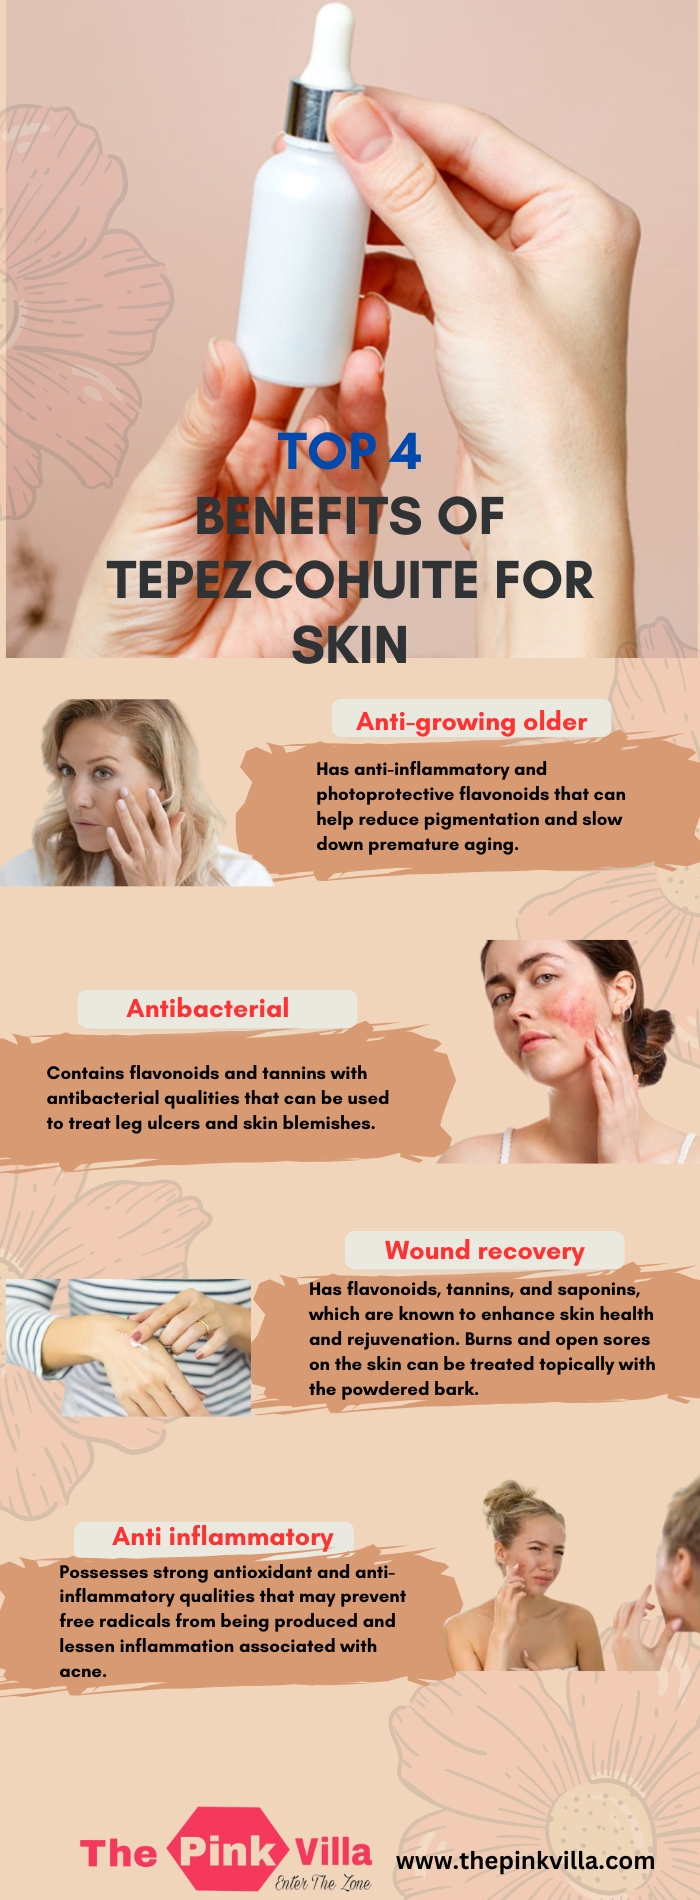 Top 4 Benefits of Tepezcohuite for Skin